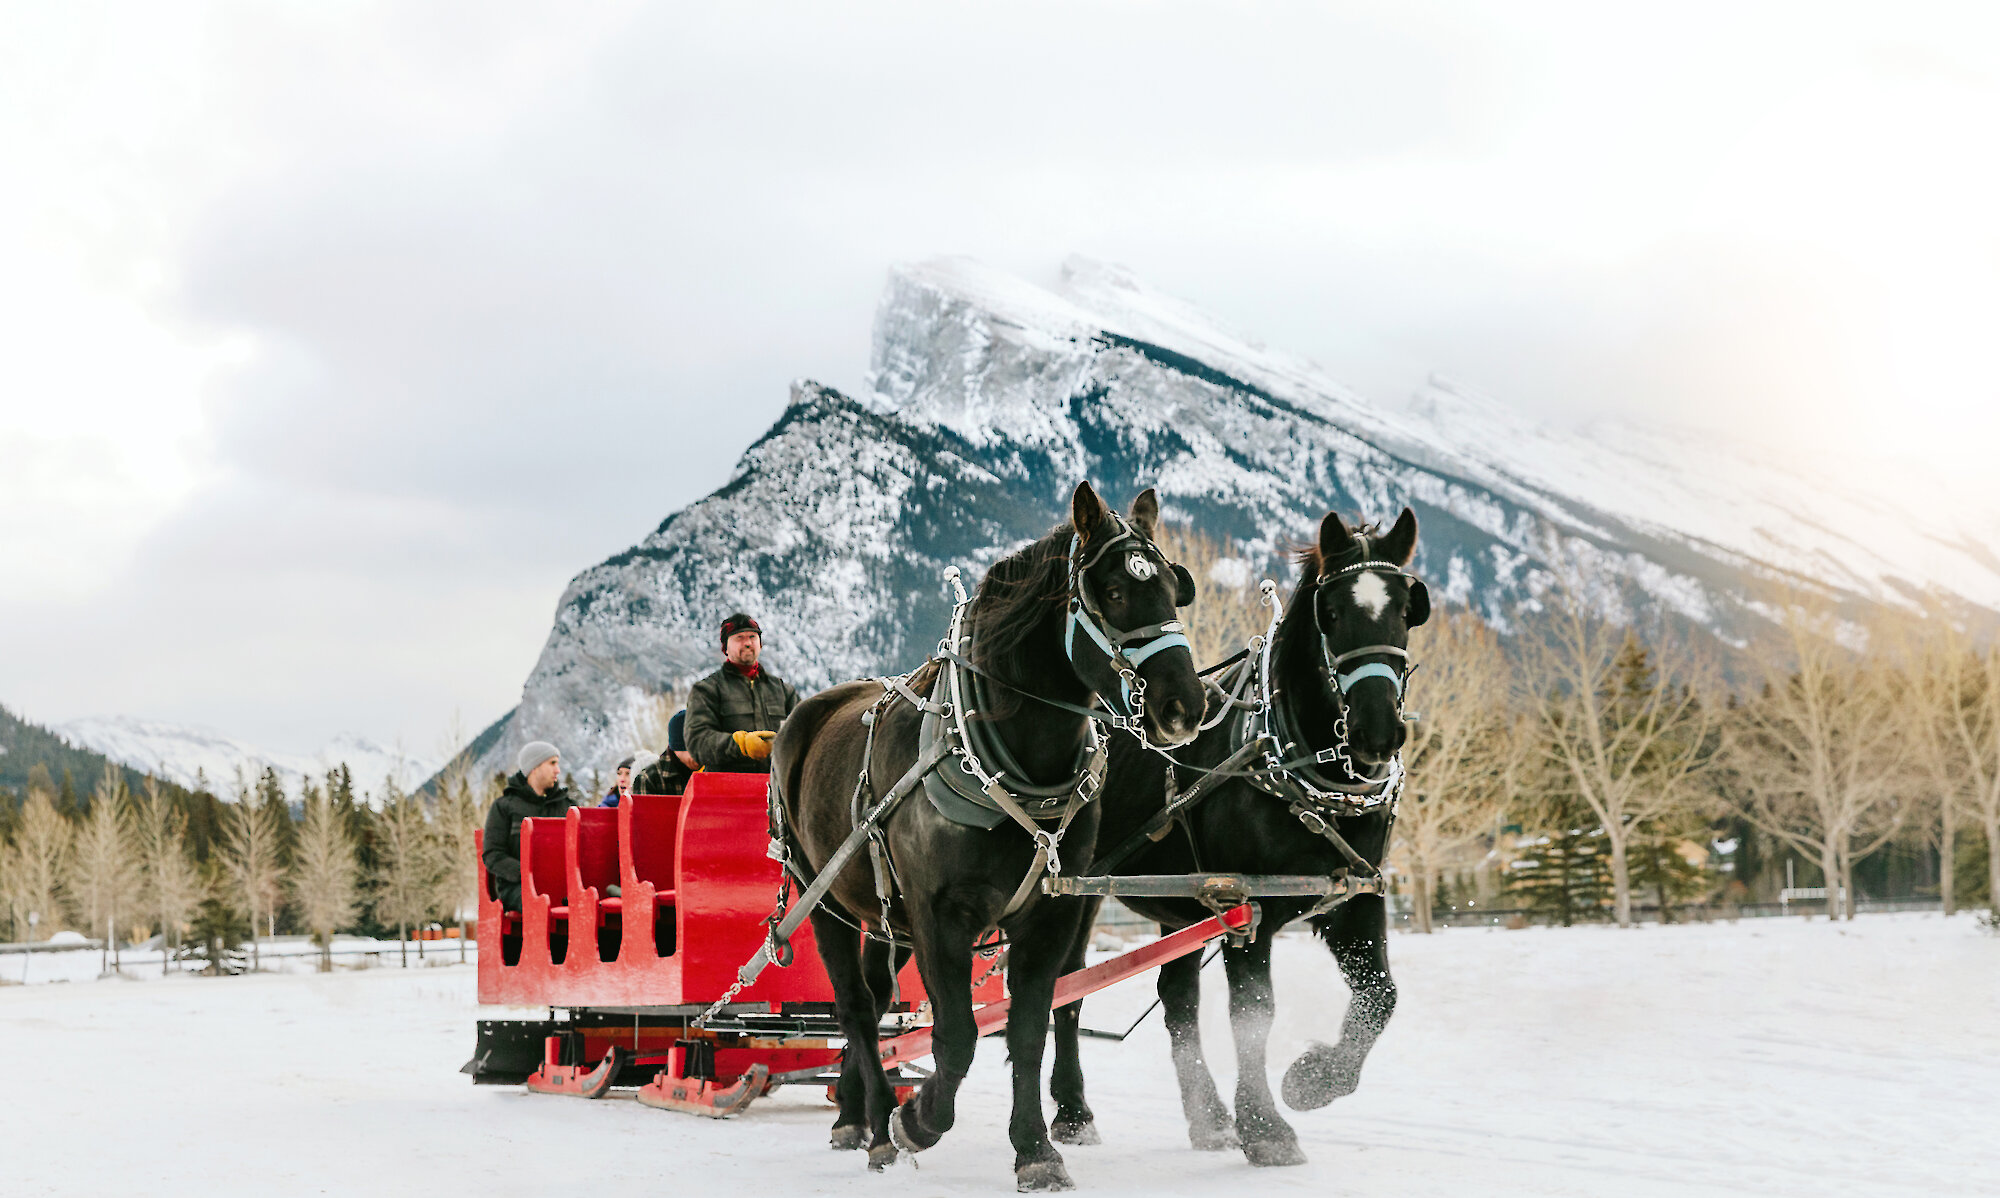 Two black horses drawing the public sleigh ride through Banff Meadows